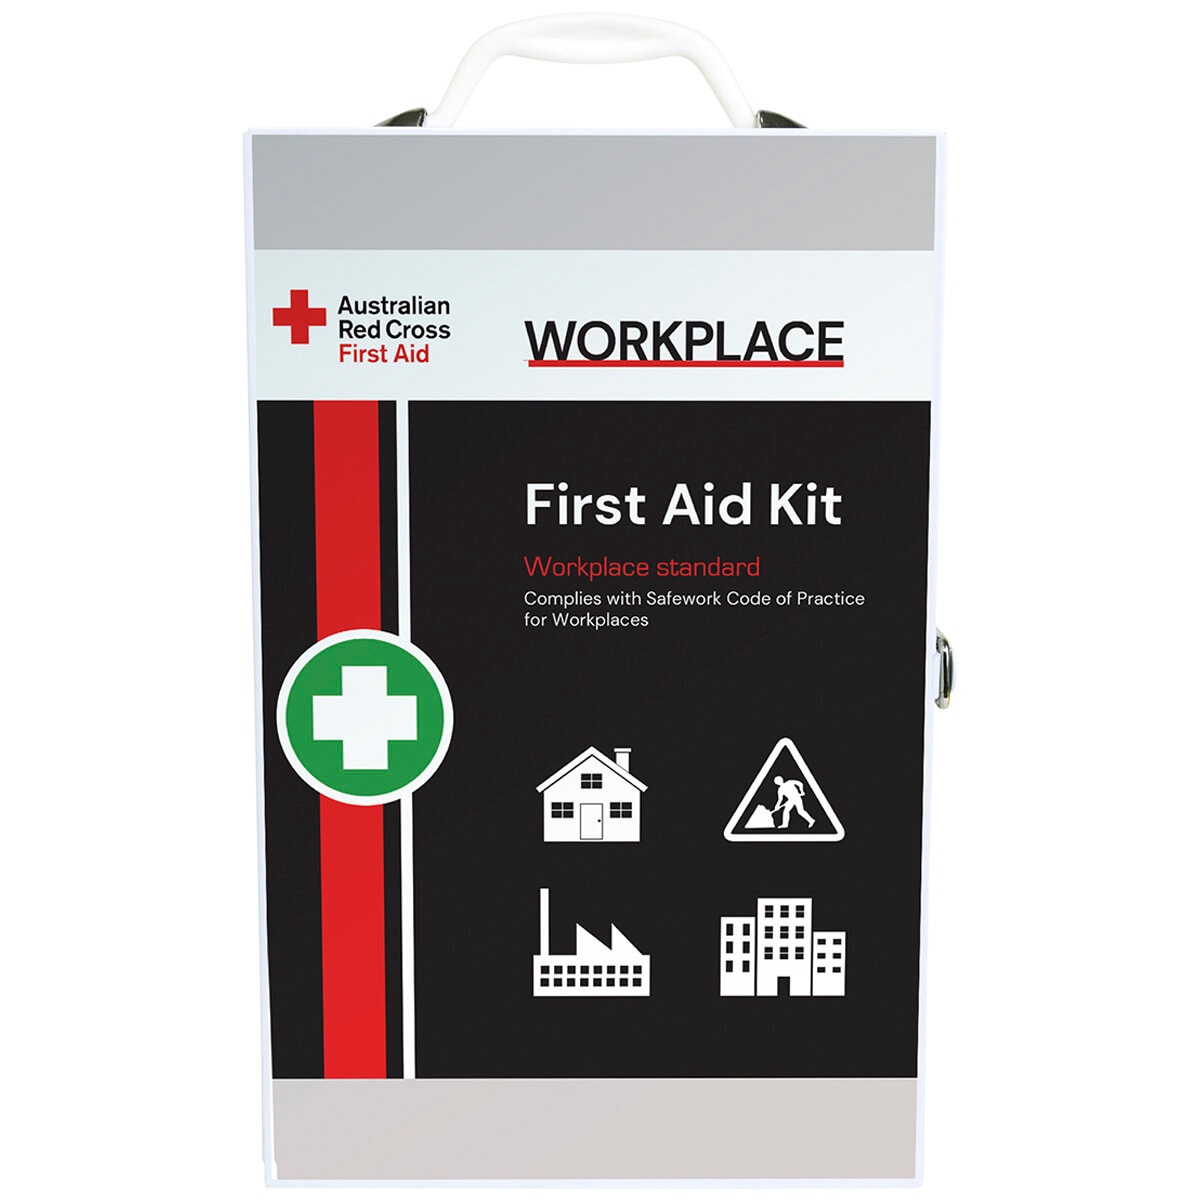 Australian Red Cross Workplace Frist Aid Kit